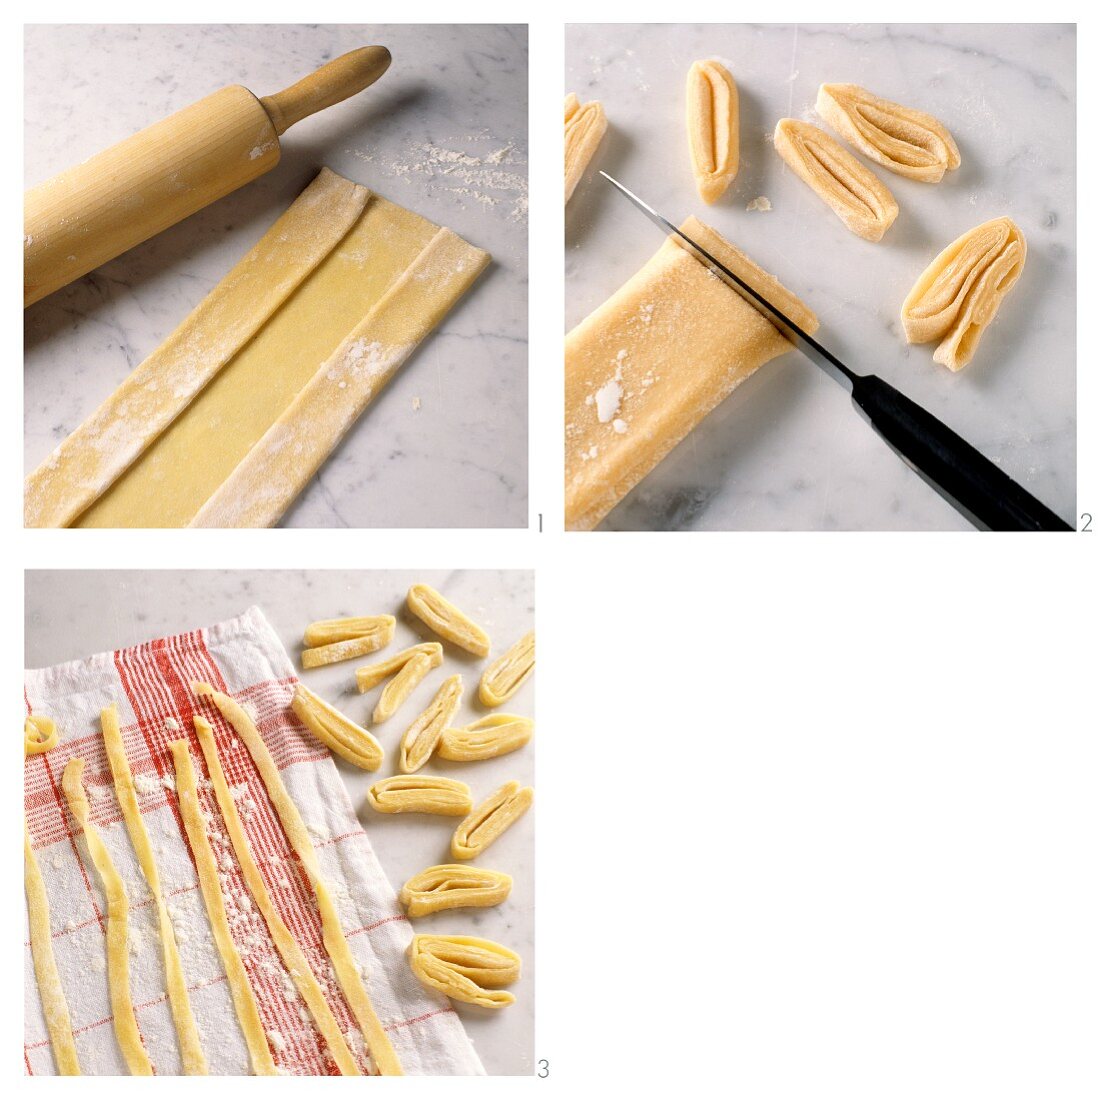 Making home-made pasta